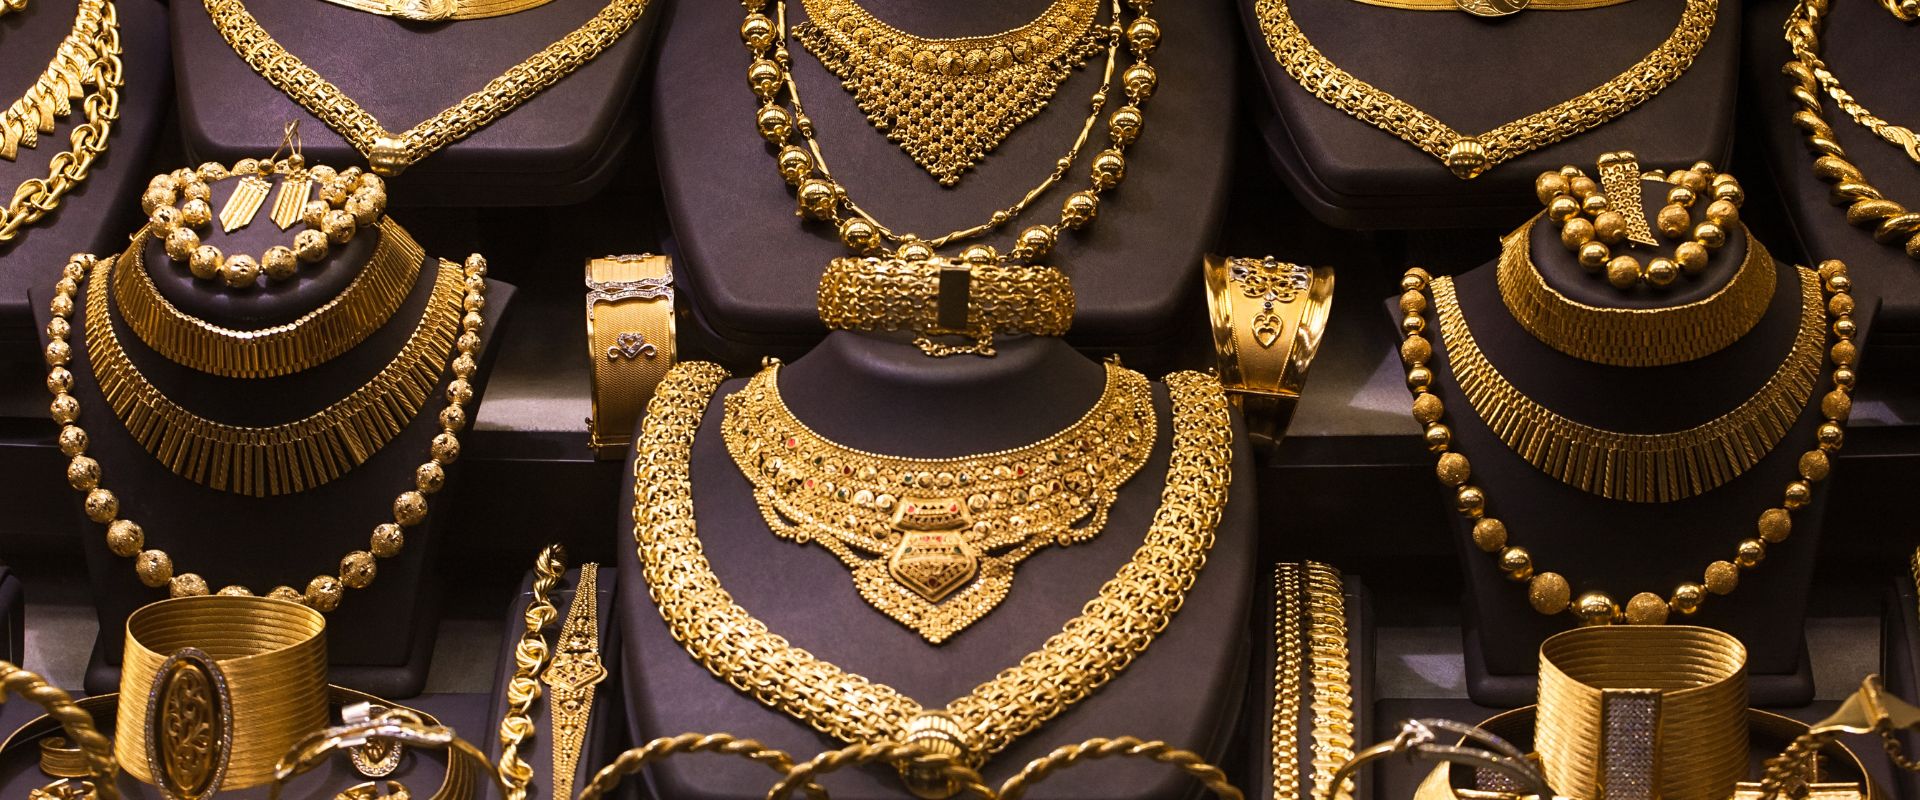 Bangladesh gold jewelries market